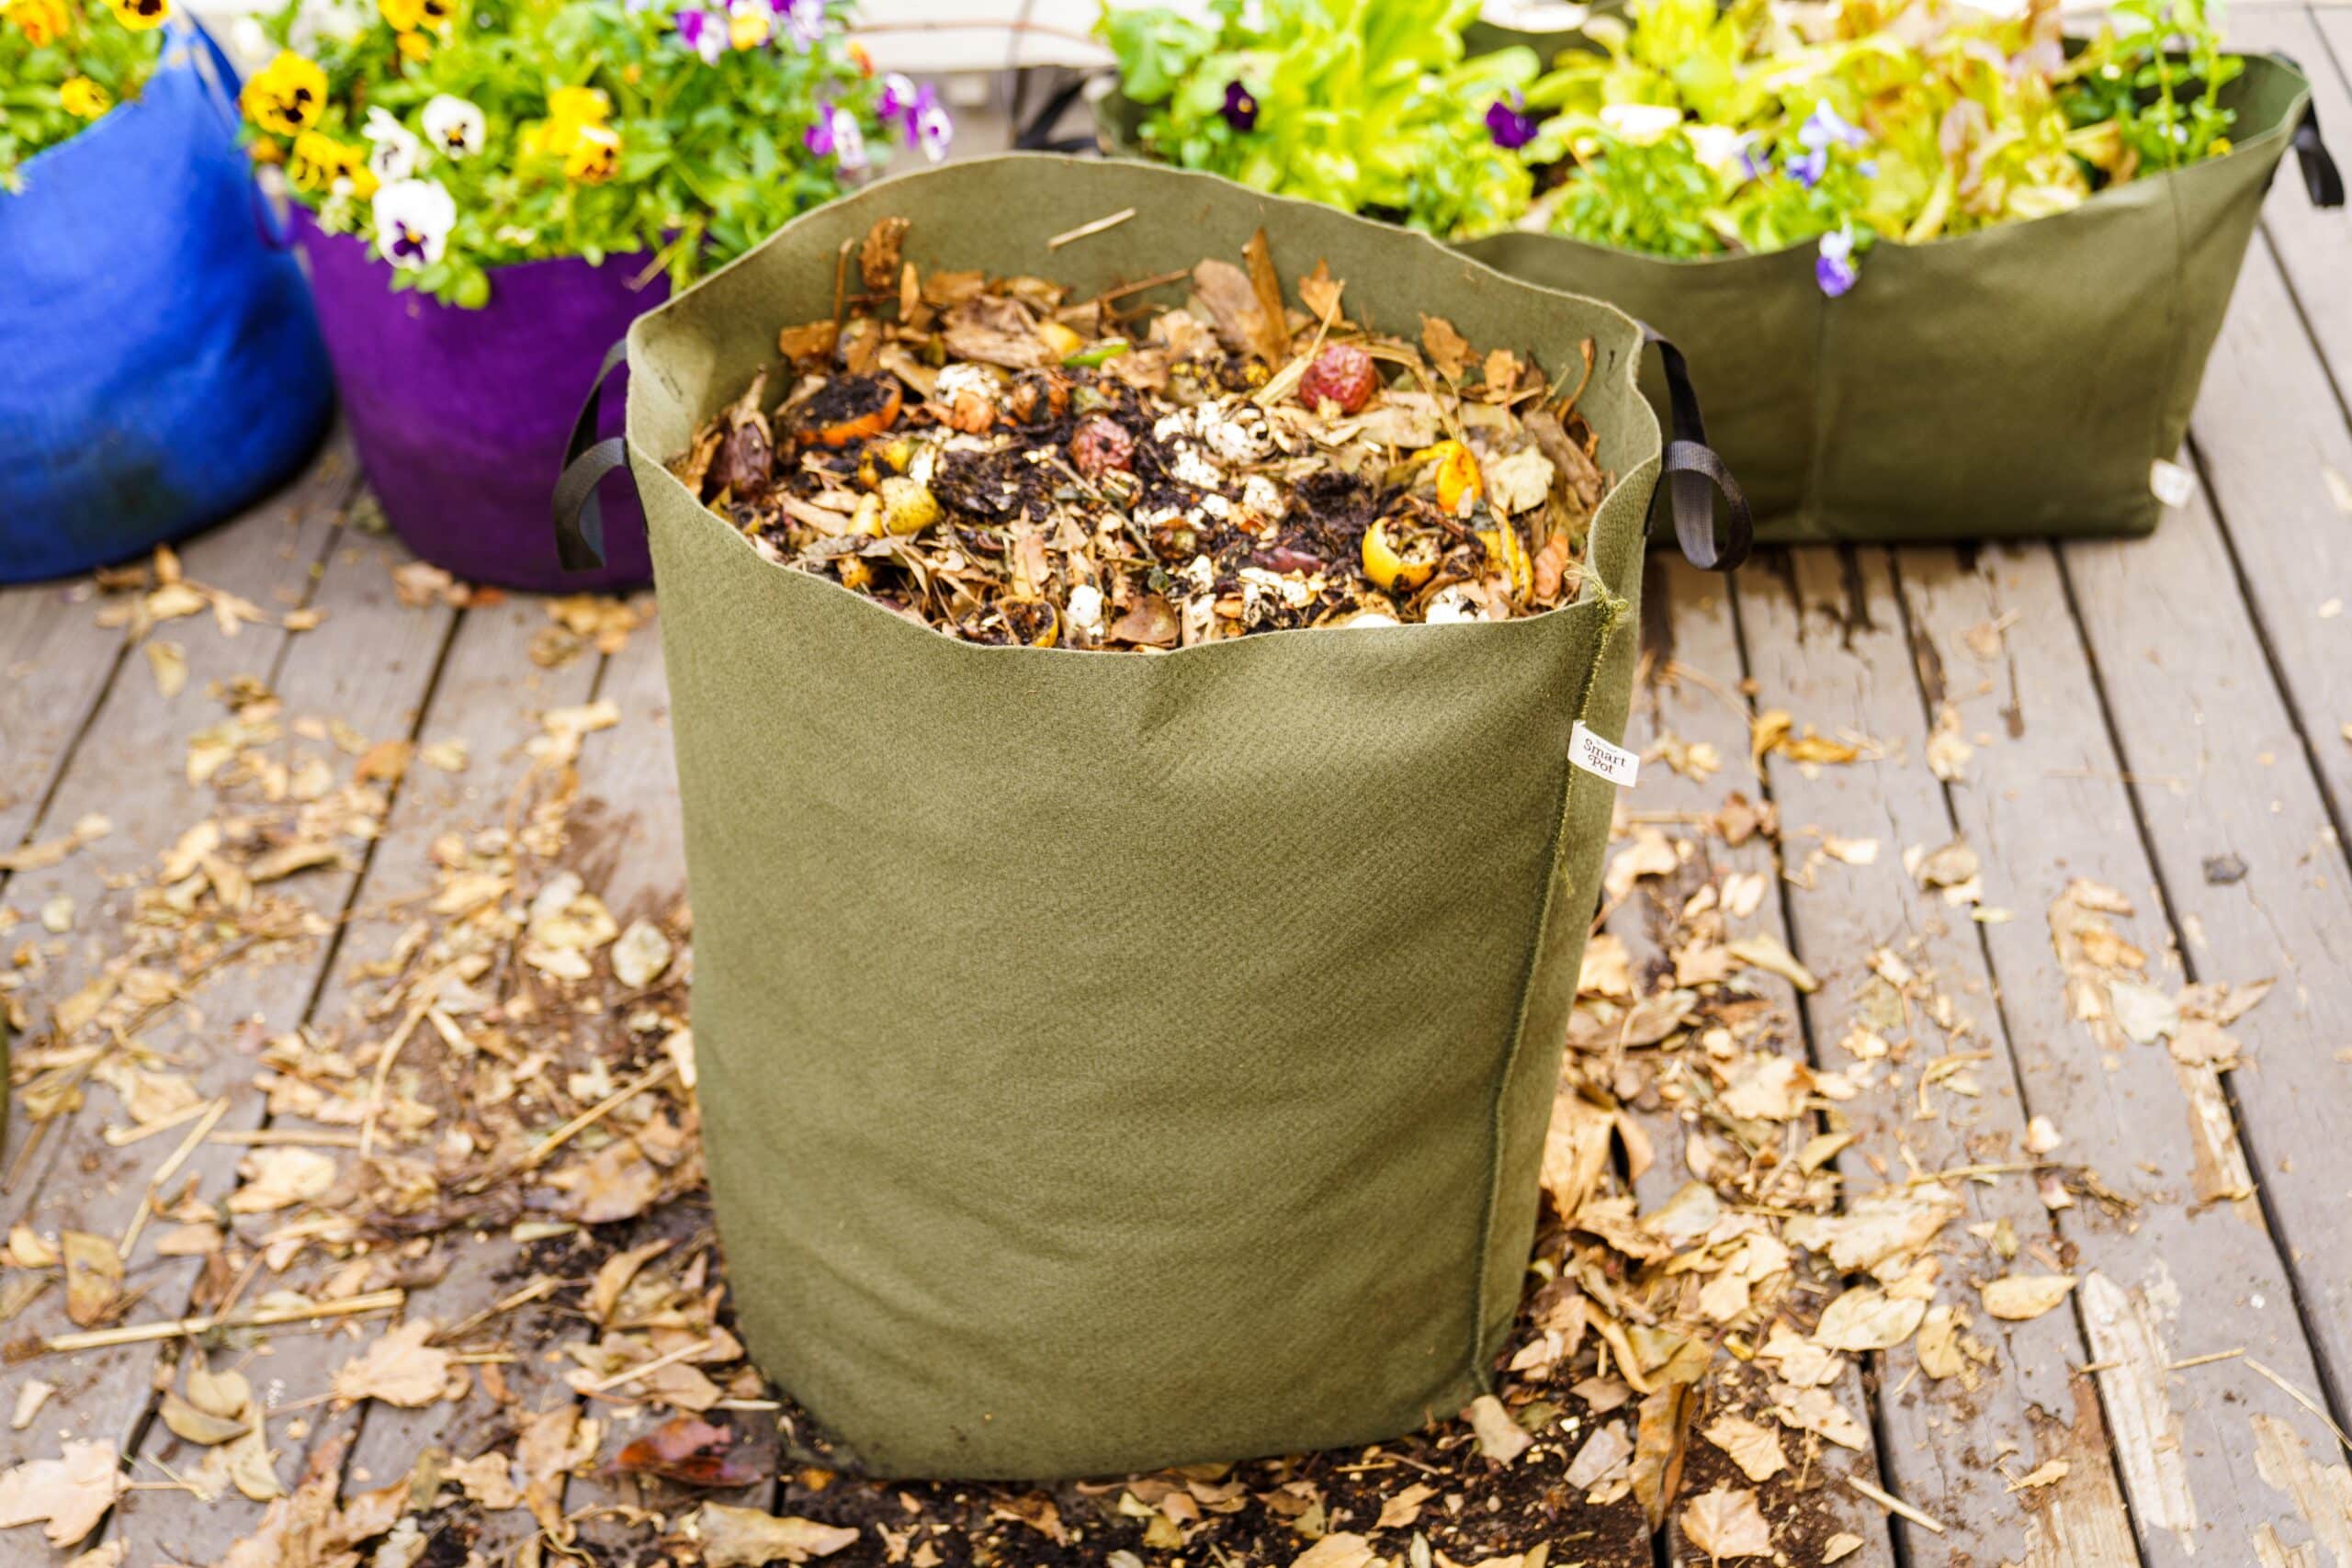 Smart Pots 12120 Compost Sak Fabric Composting Container